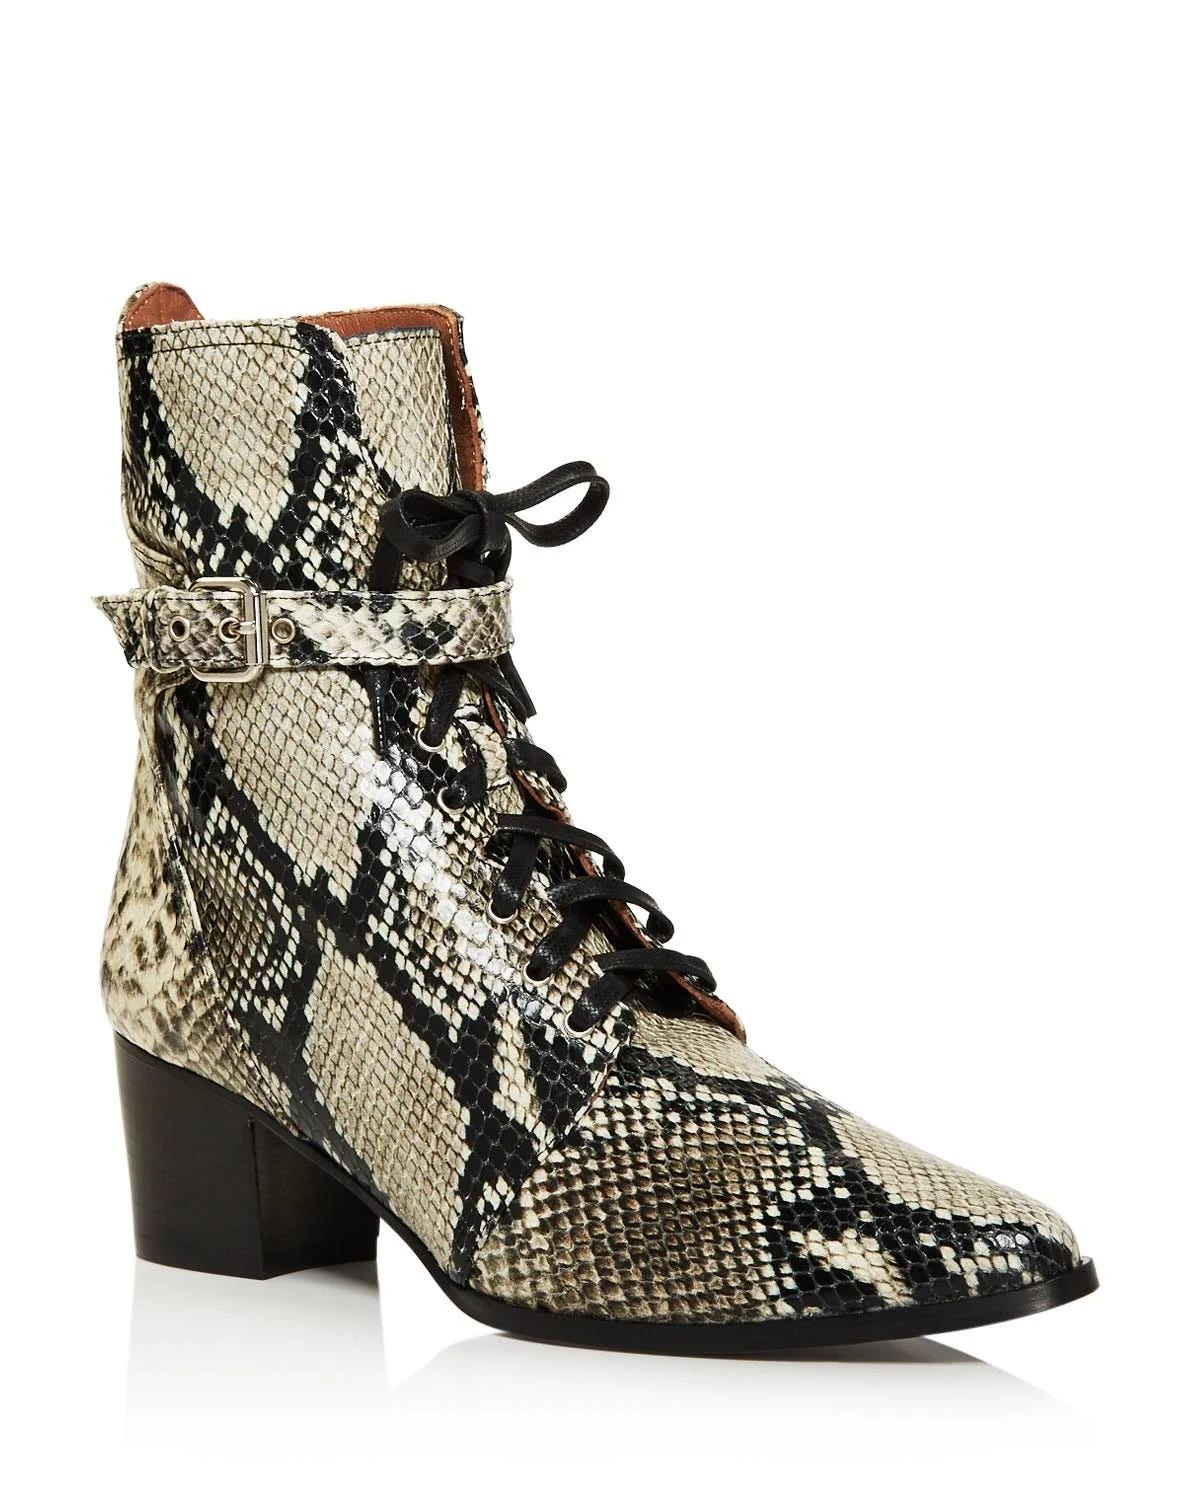 Stylish, Embossed Python-Print Snakeskin Women's Ankle Boots | Image